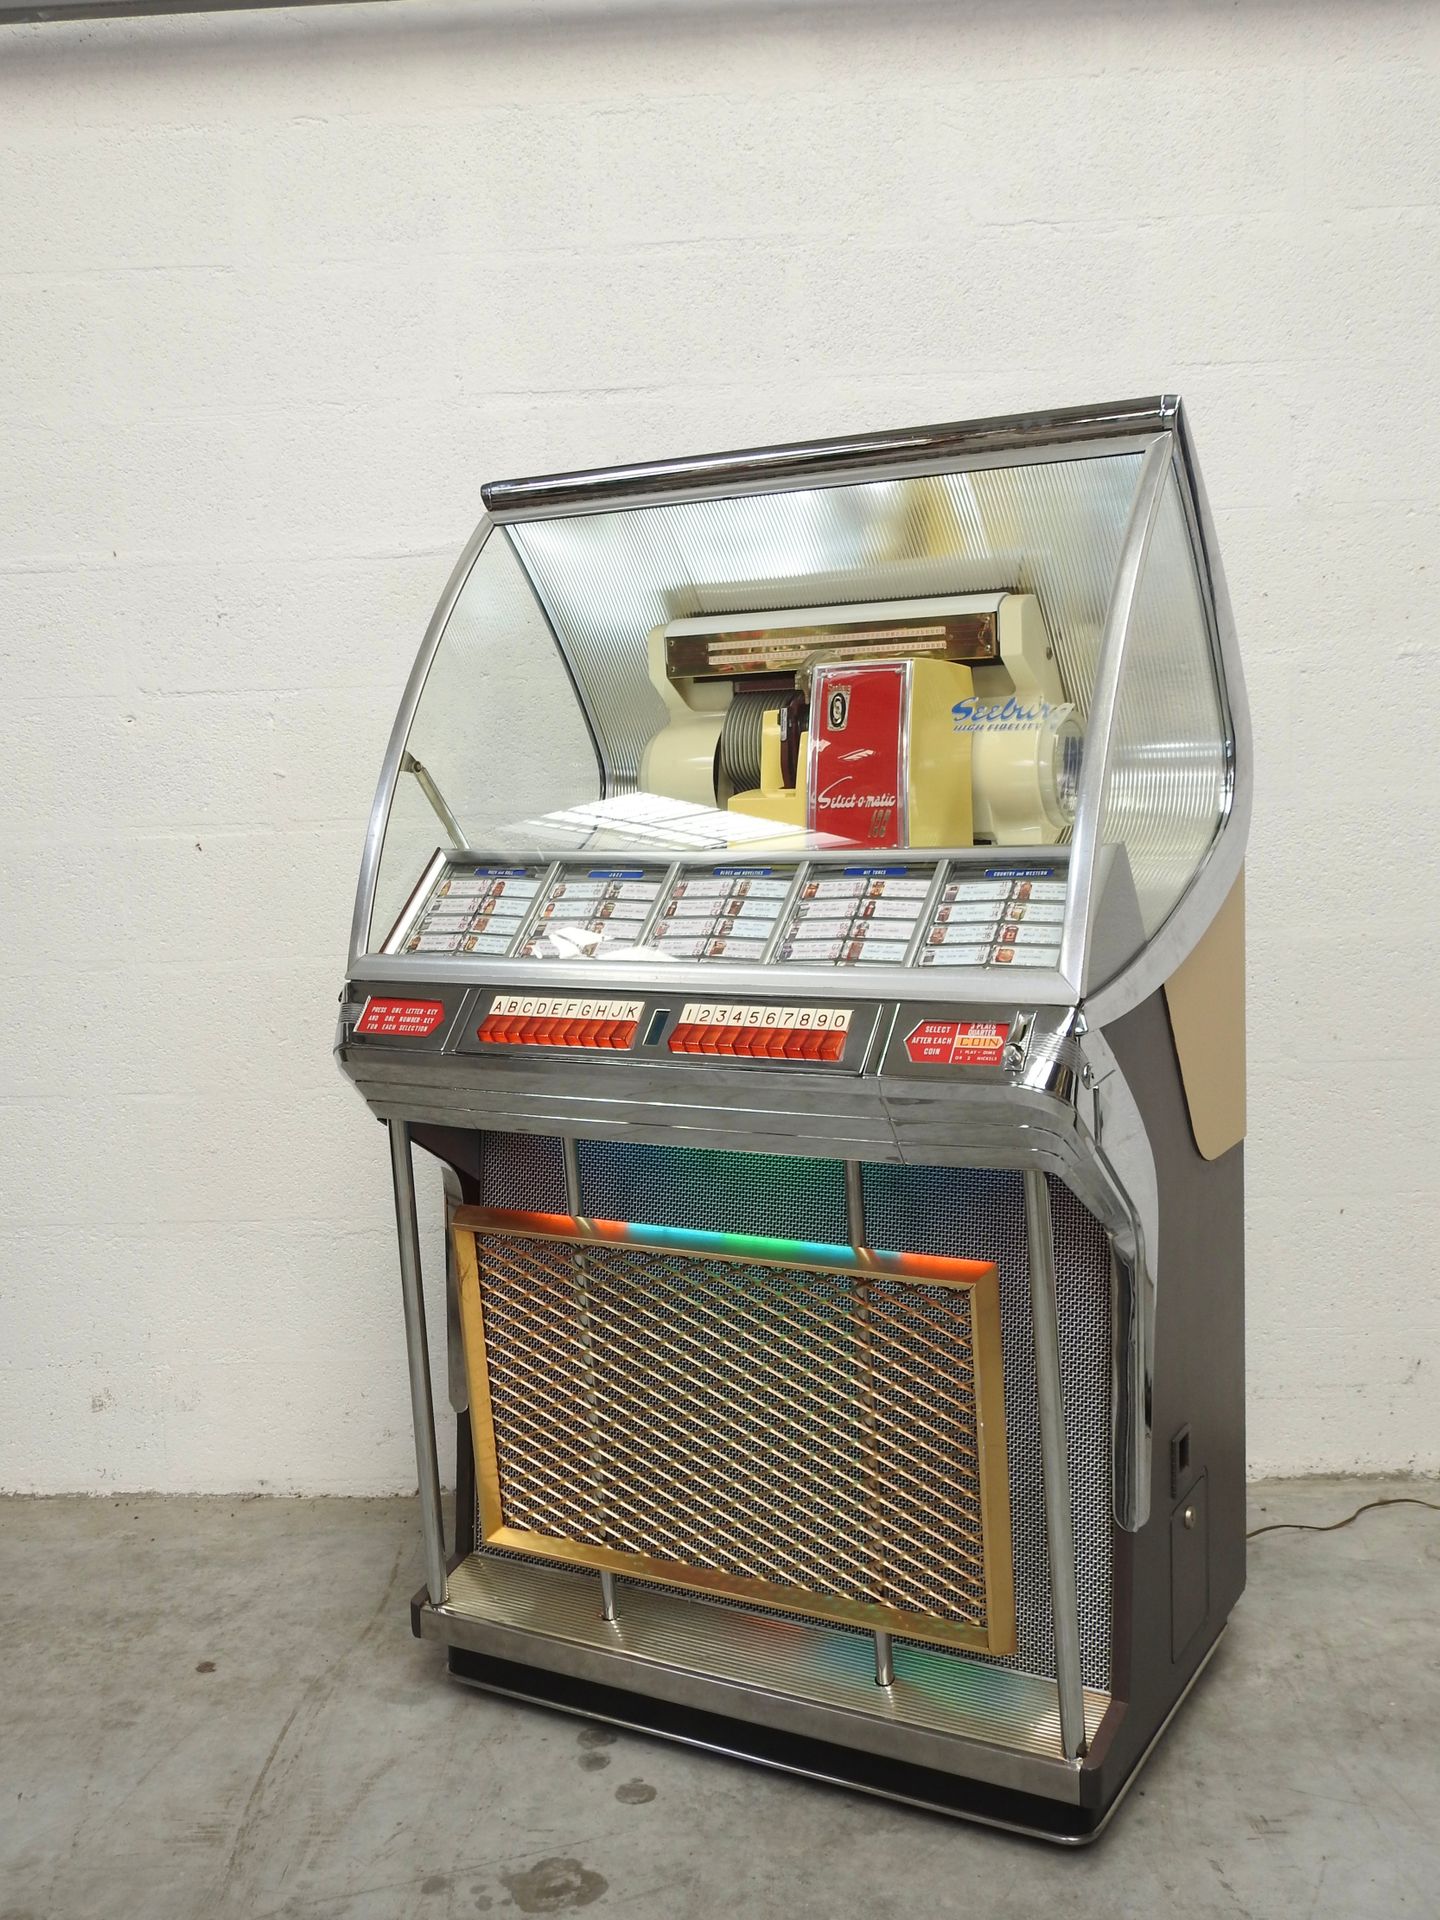 Null JUKEBOX

SEEBURG 100 J型，美国，1955年

喷漆的木箱，镀铬和抛光的金属框架。

在一个滑架上的可见机制，允许播放两侧的

4&hellip;